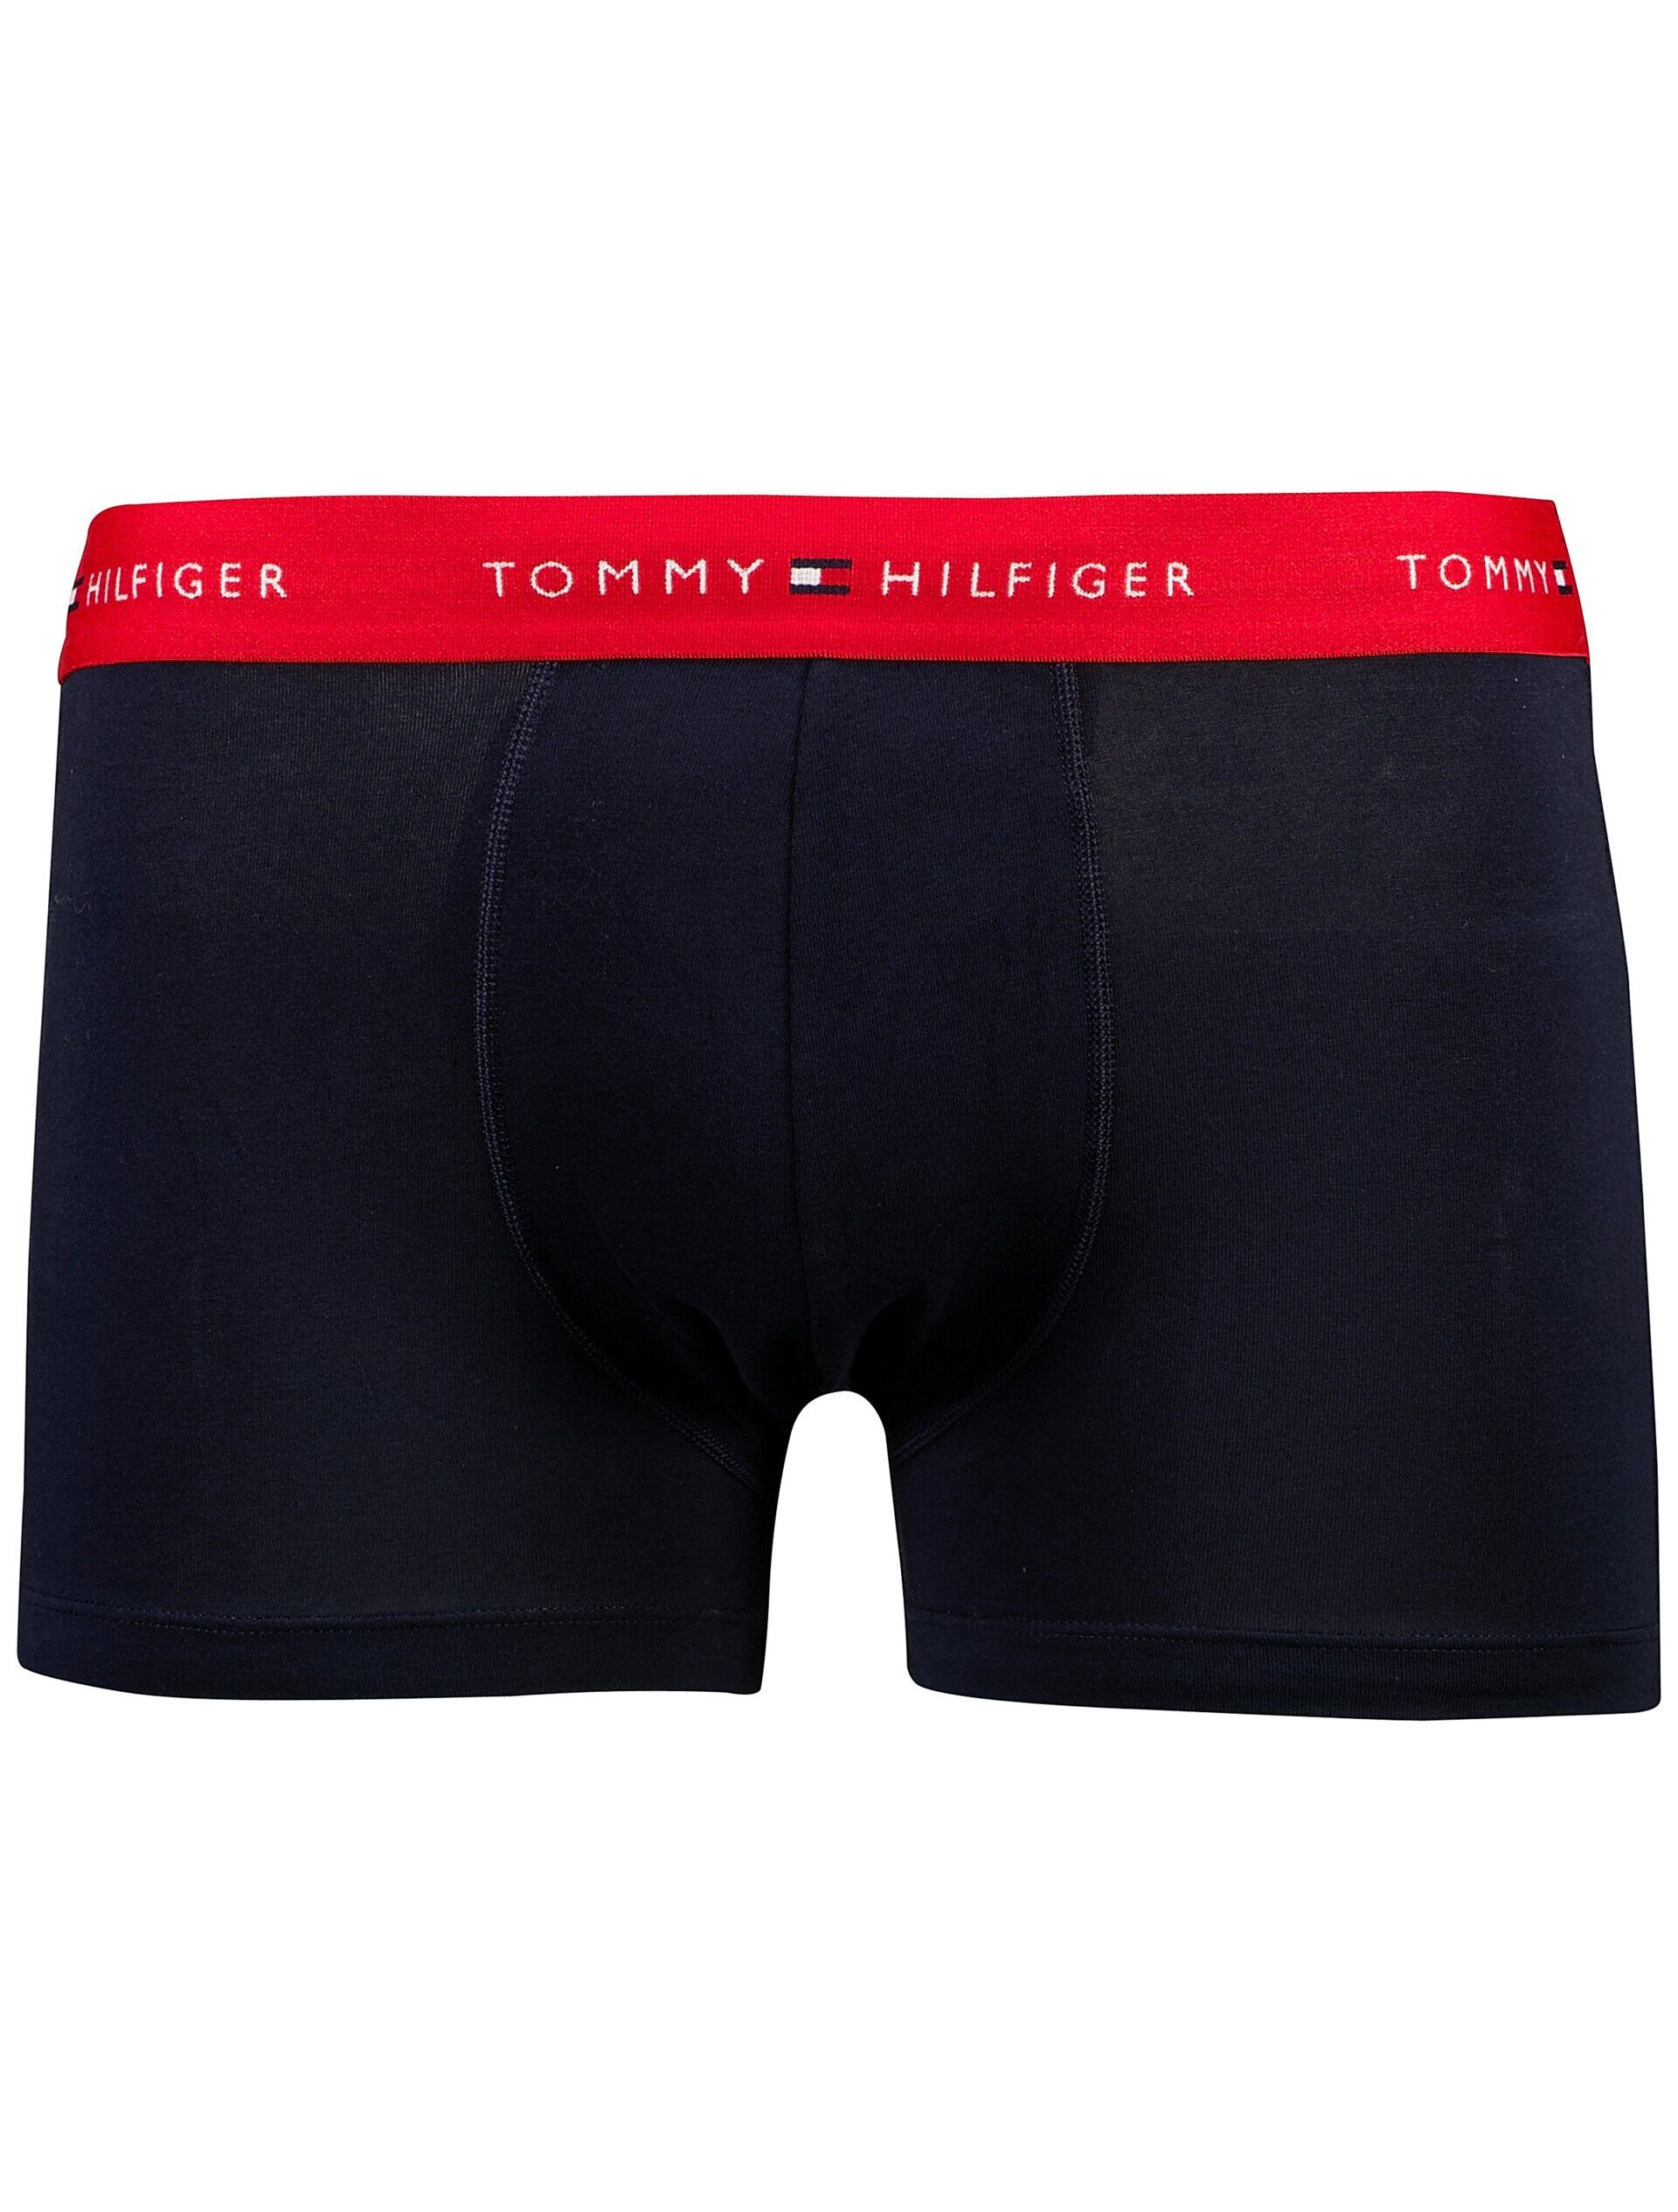 Tommy Hilfiger  Tights 90-900863